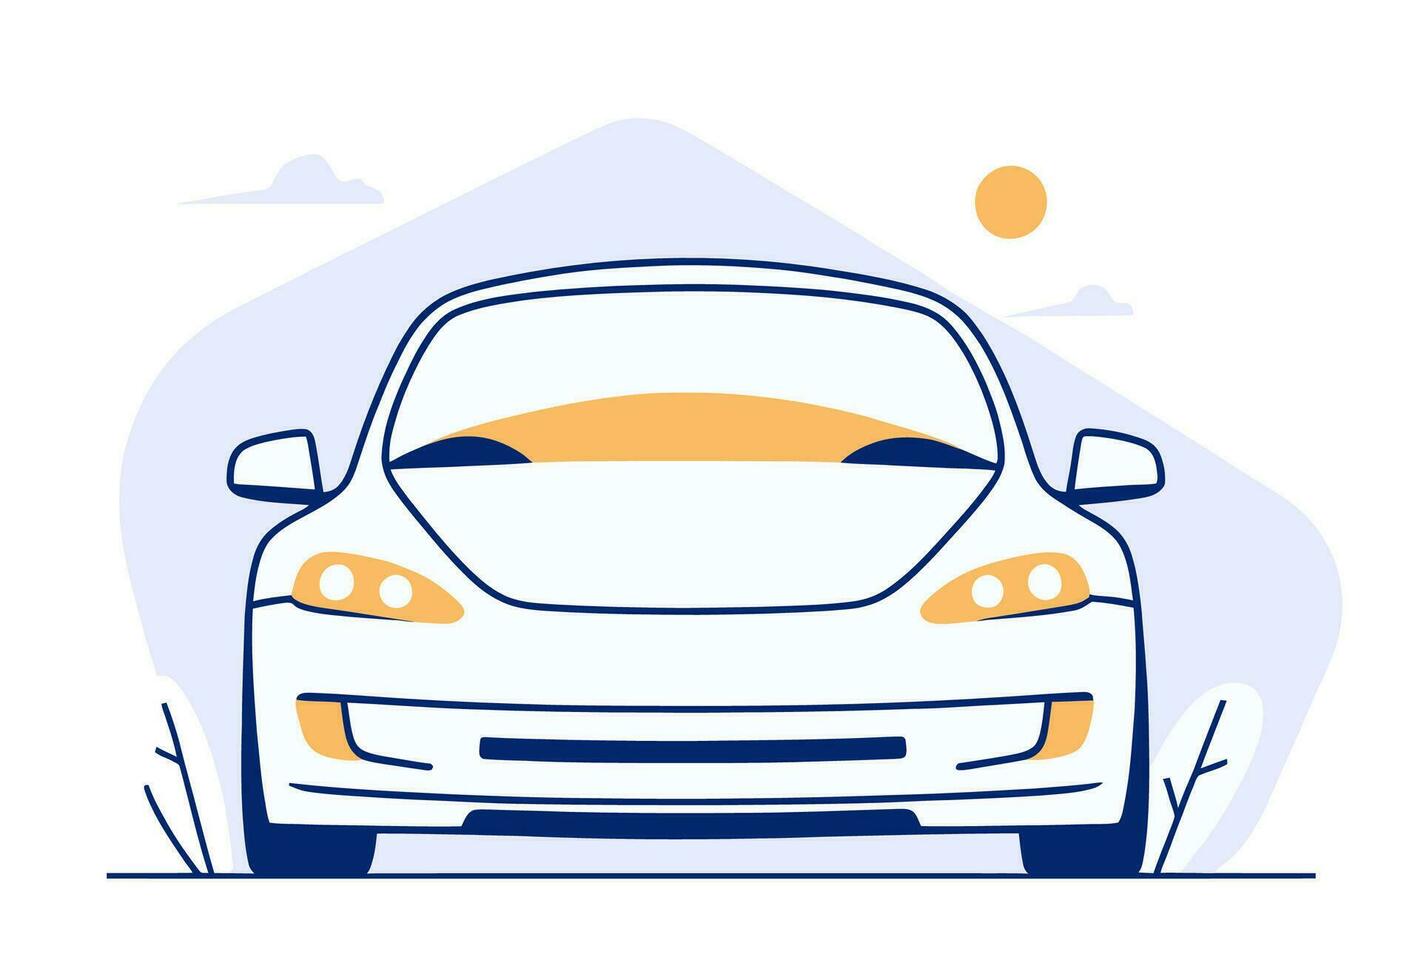 Car, simple flat vector illustration.